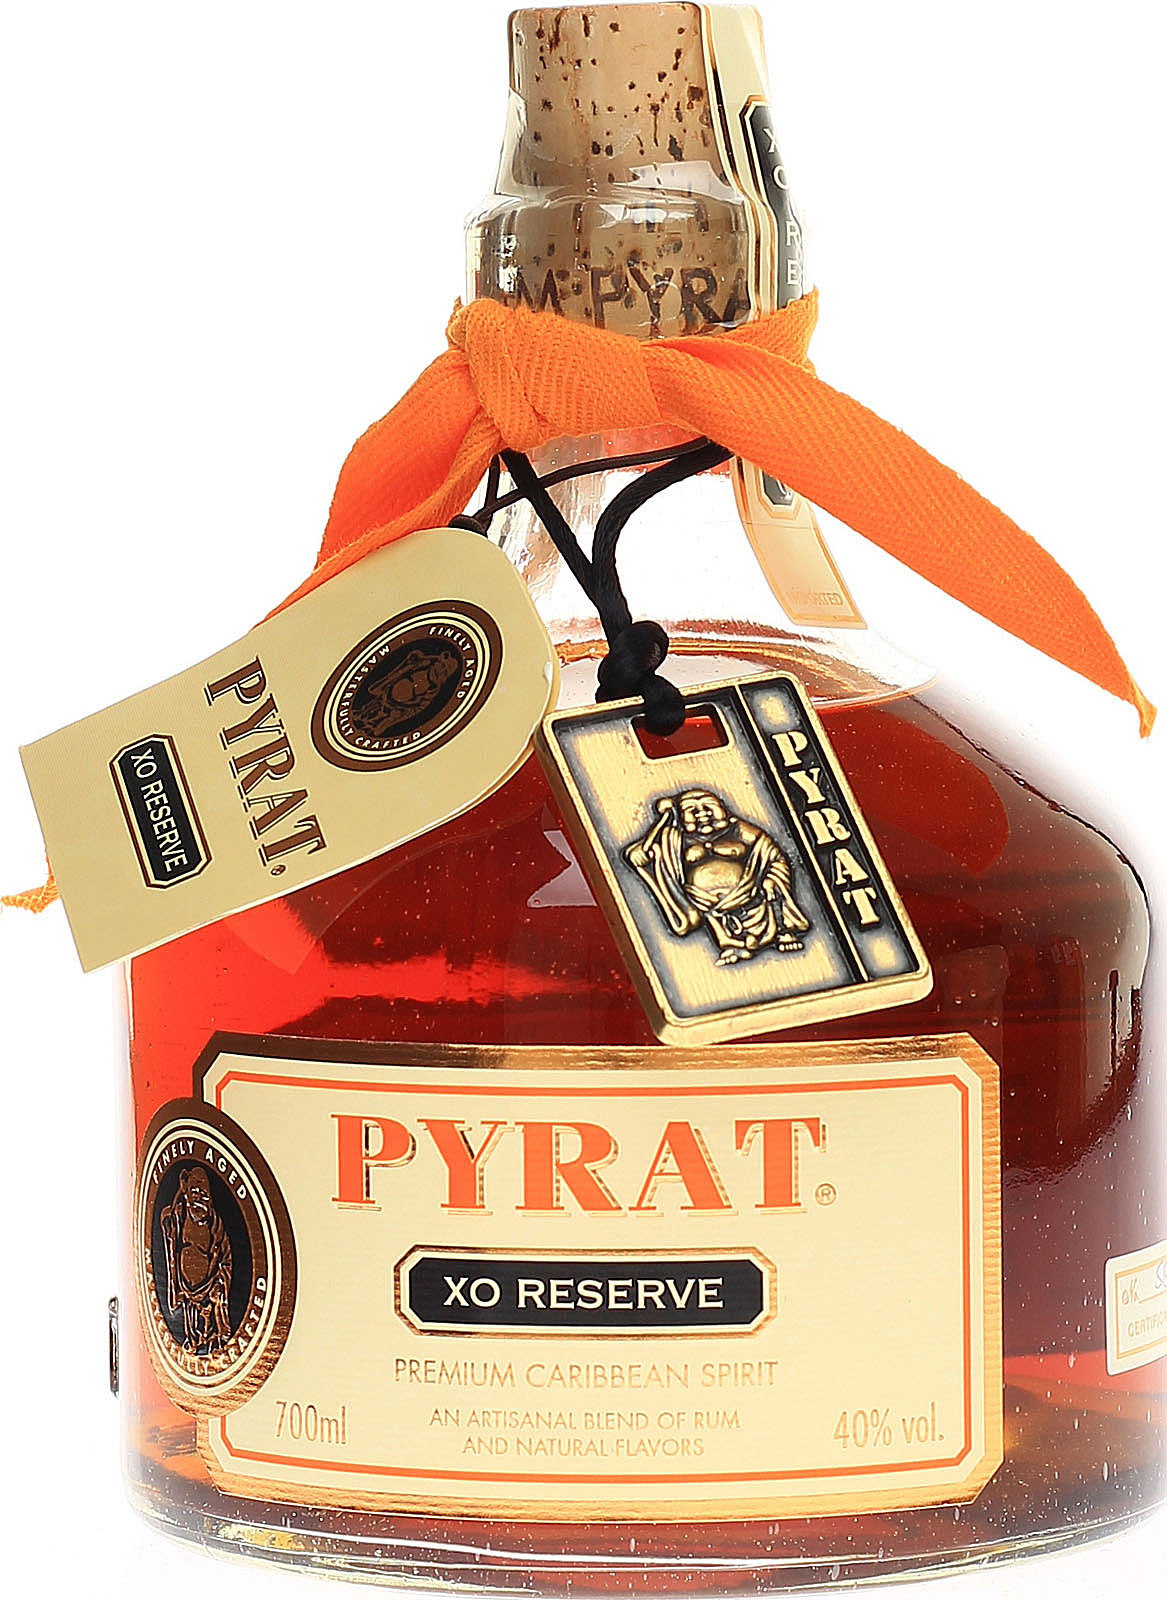 Pyrat-XO-Reserve.1117054a.jpg